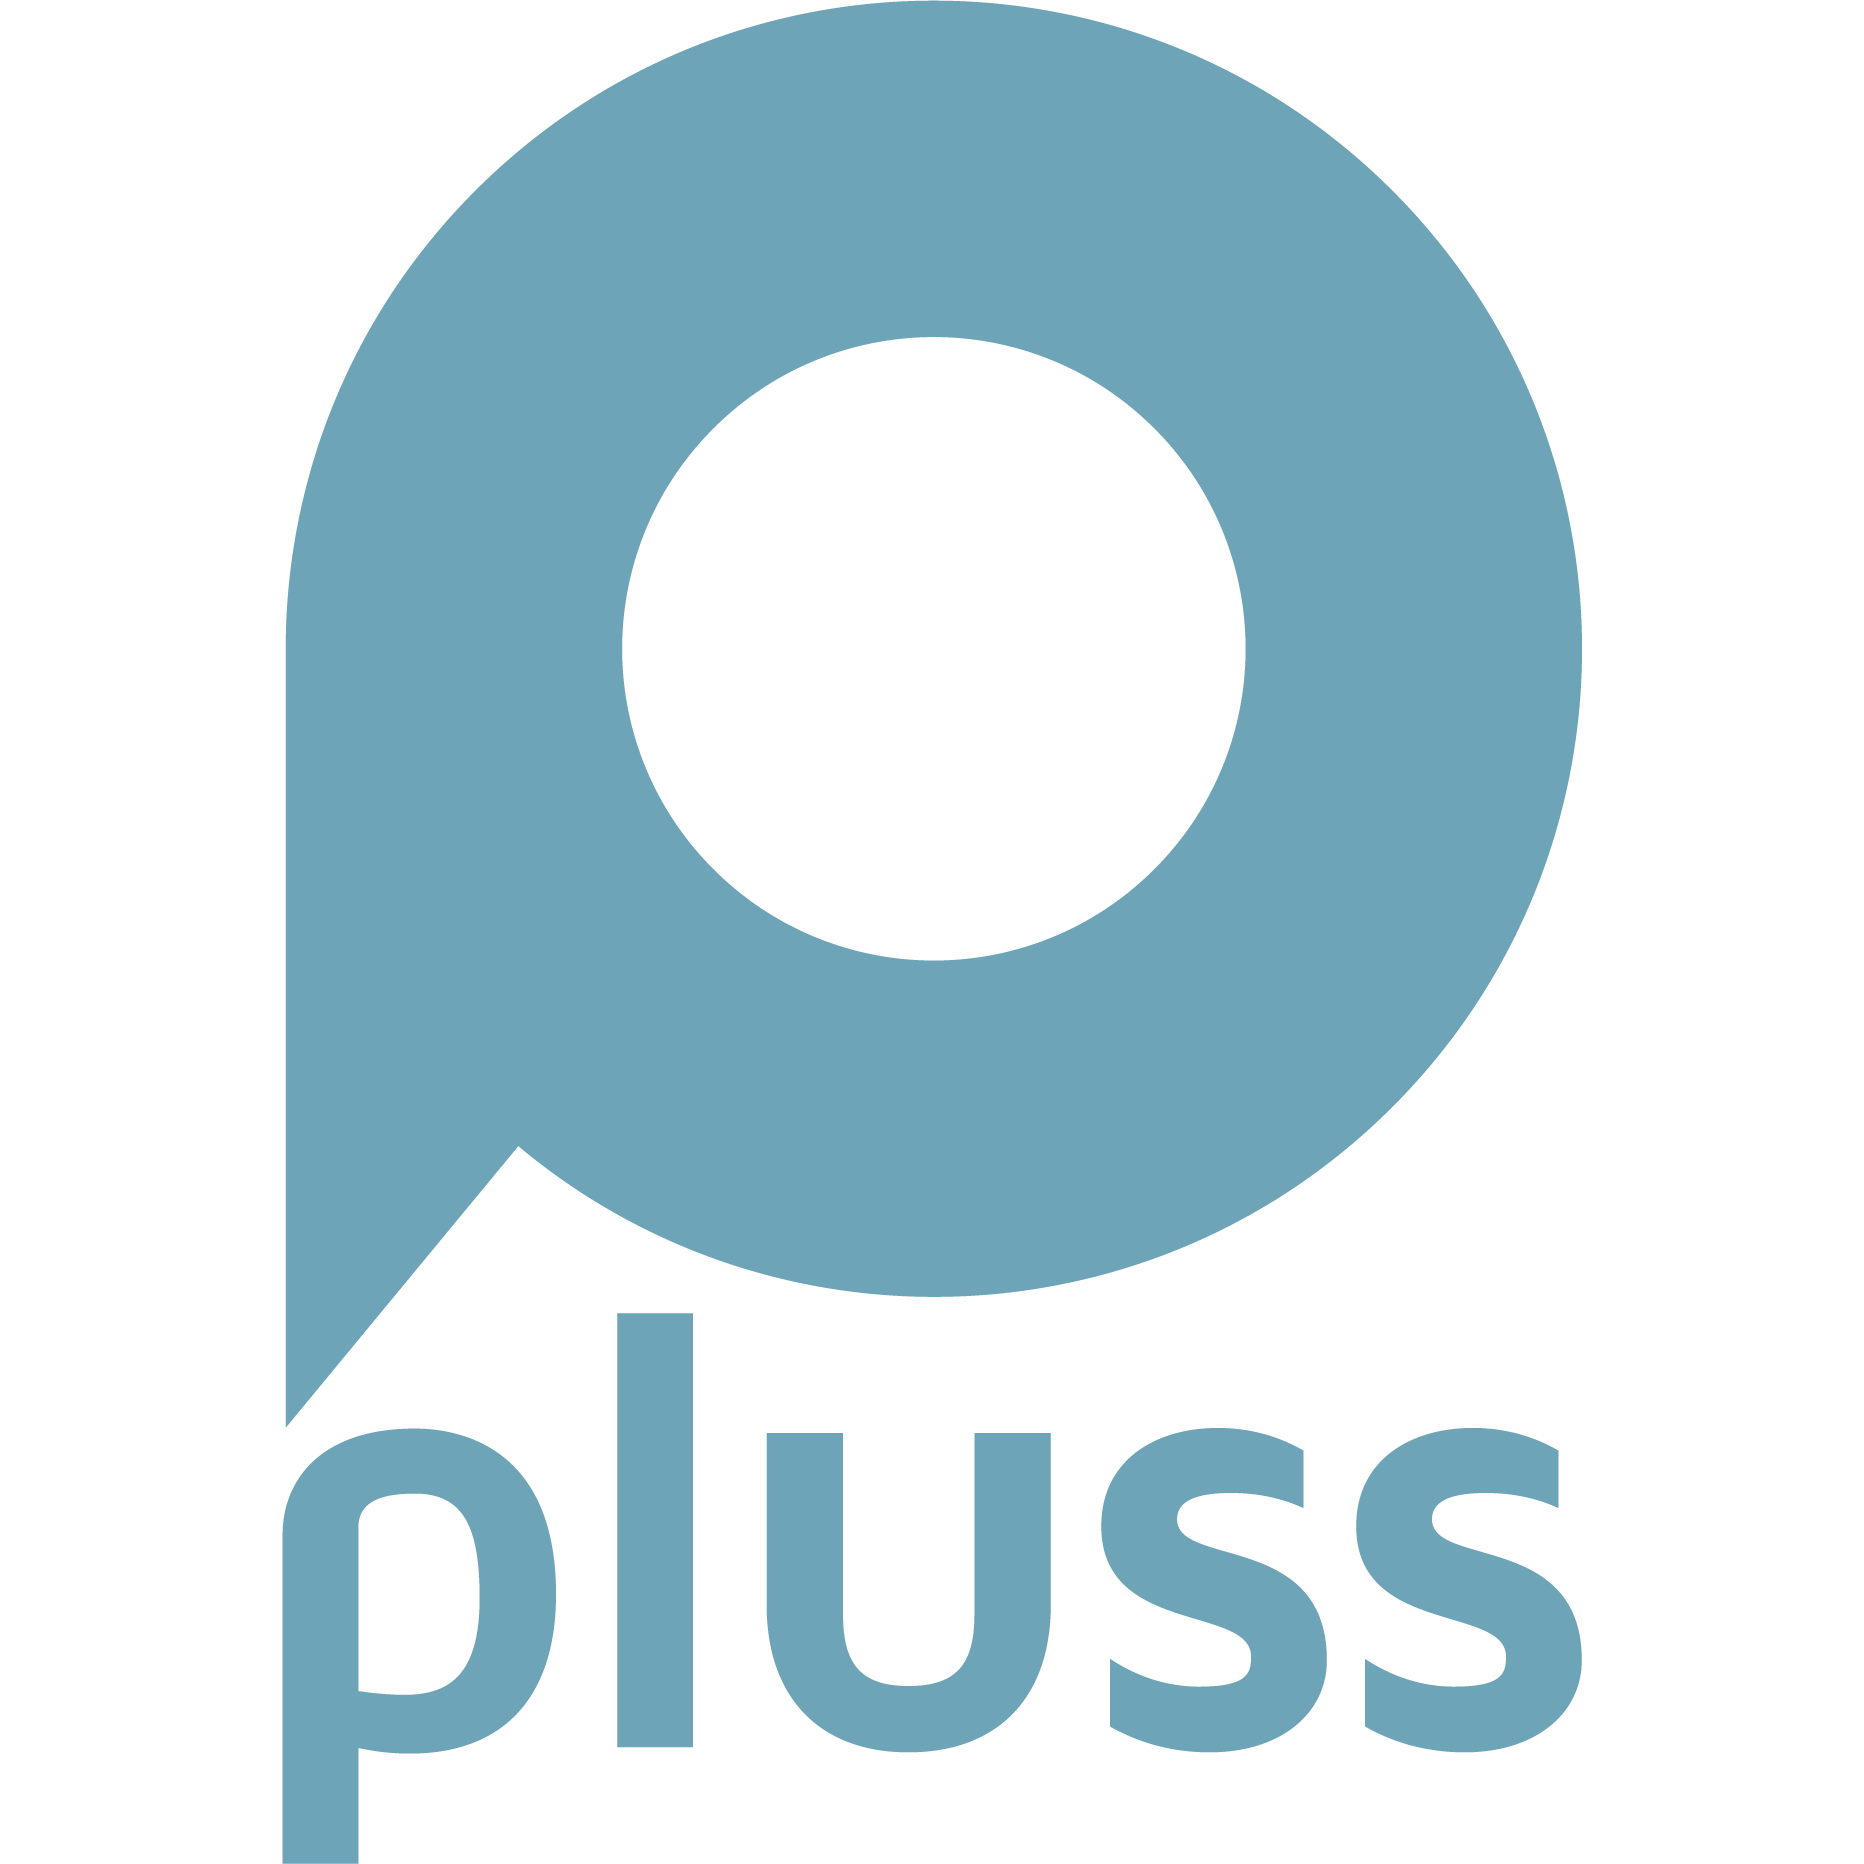 pluss Düsseldorf - Care People (Medizin/Pflege) & Bildung und Soziales in Düsseldorf - Logo